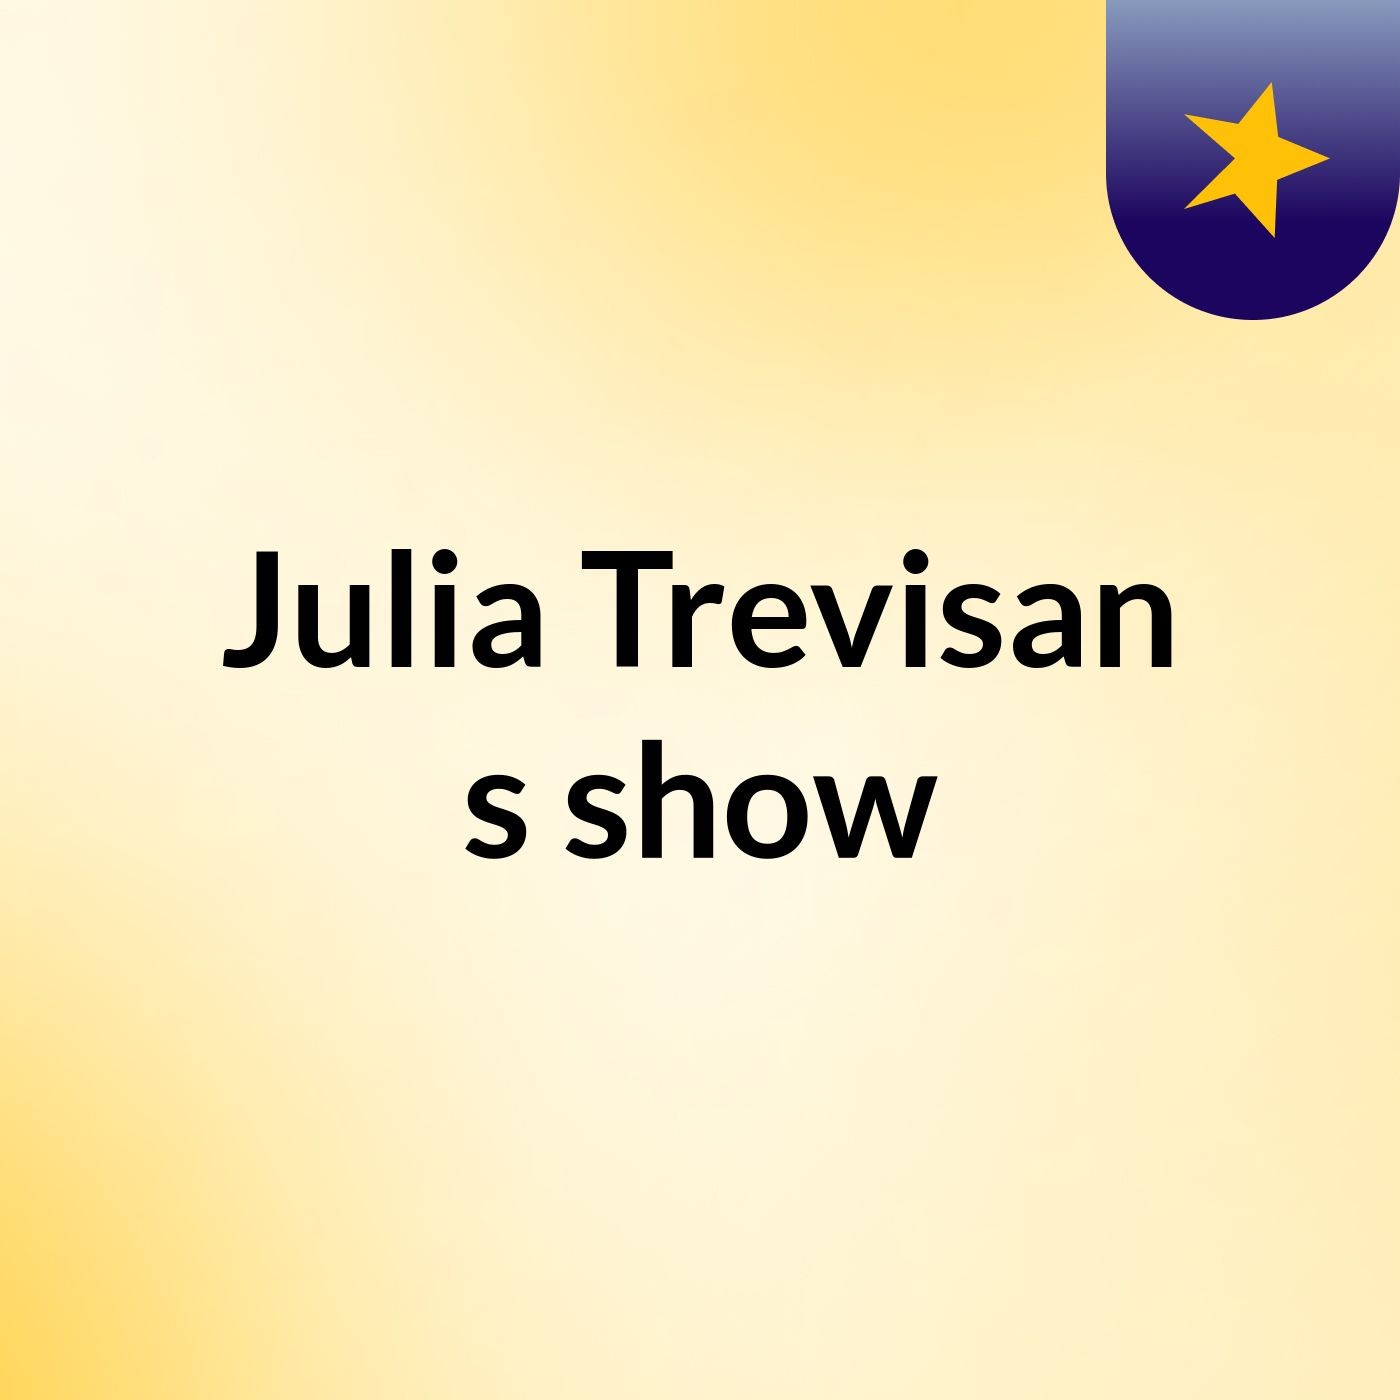 Julia Trevisan's show